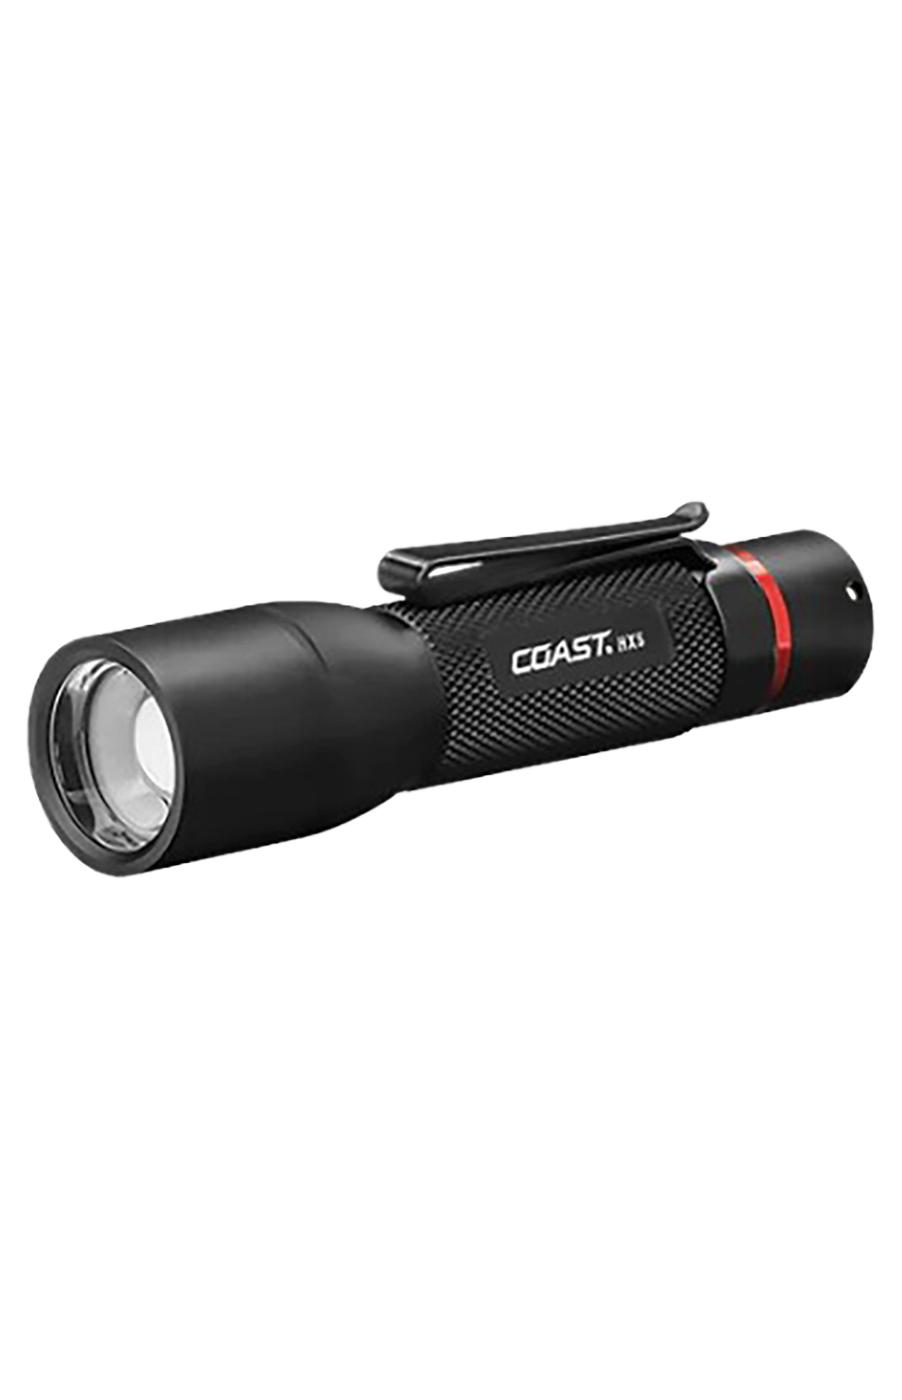 Coast HX5 Focusing Beam Pocket Flashlight; image 6 of 6